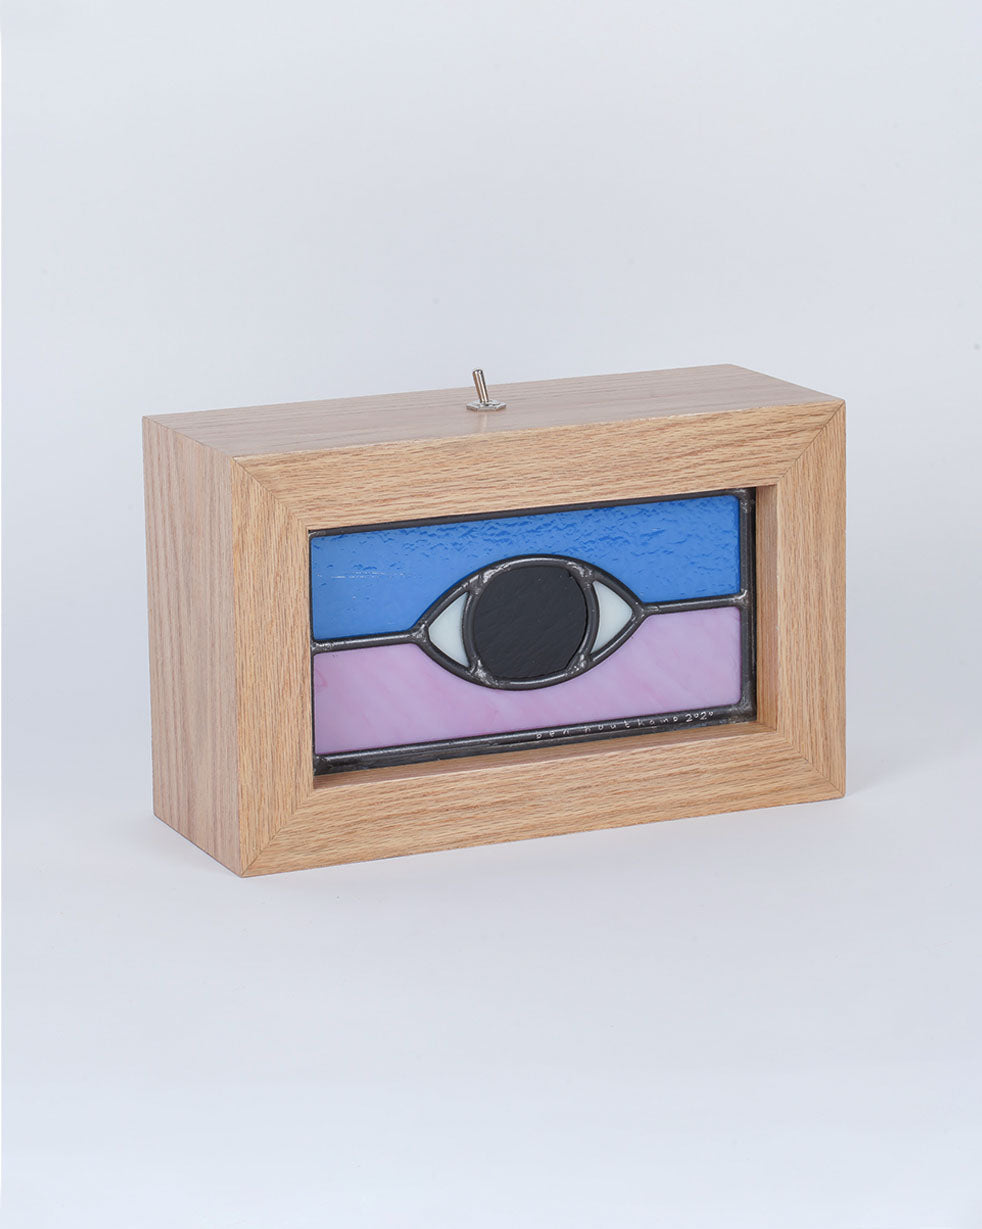 Ben Houtkamp: Stained Glass Light Box - Blue/Purple